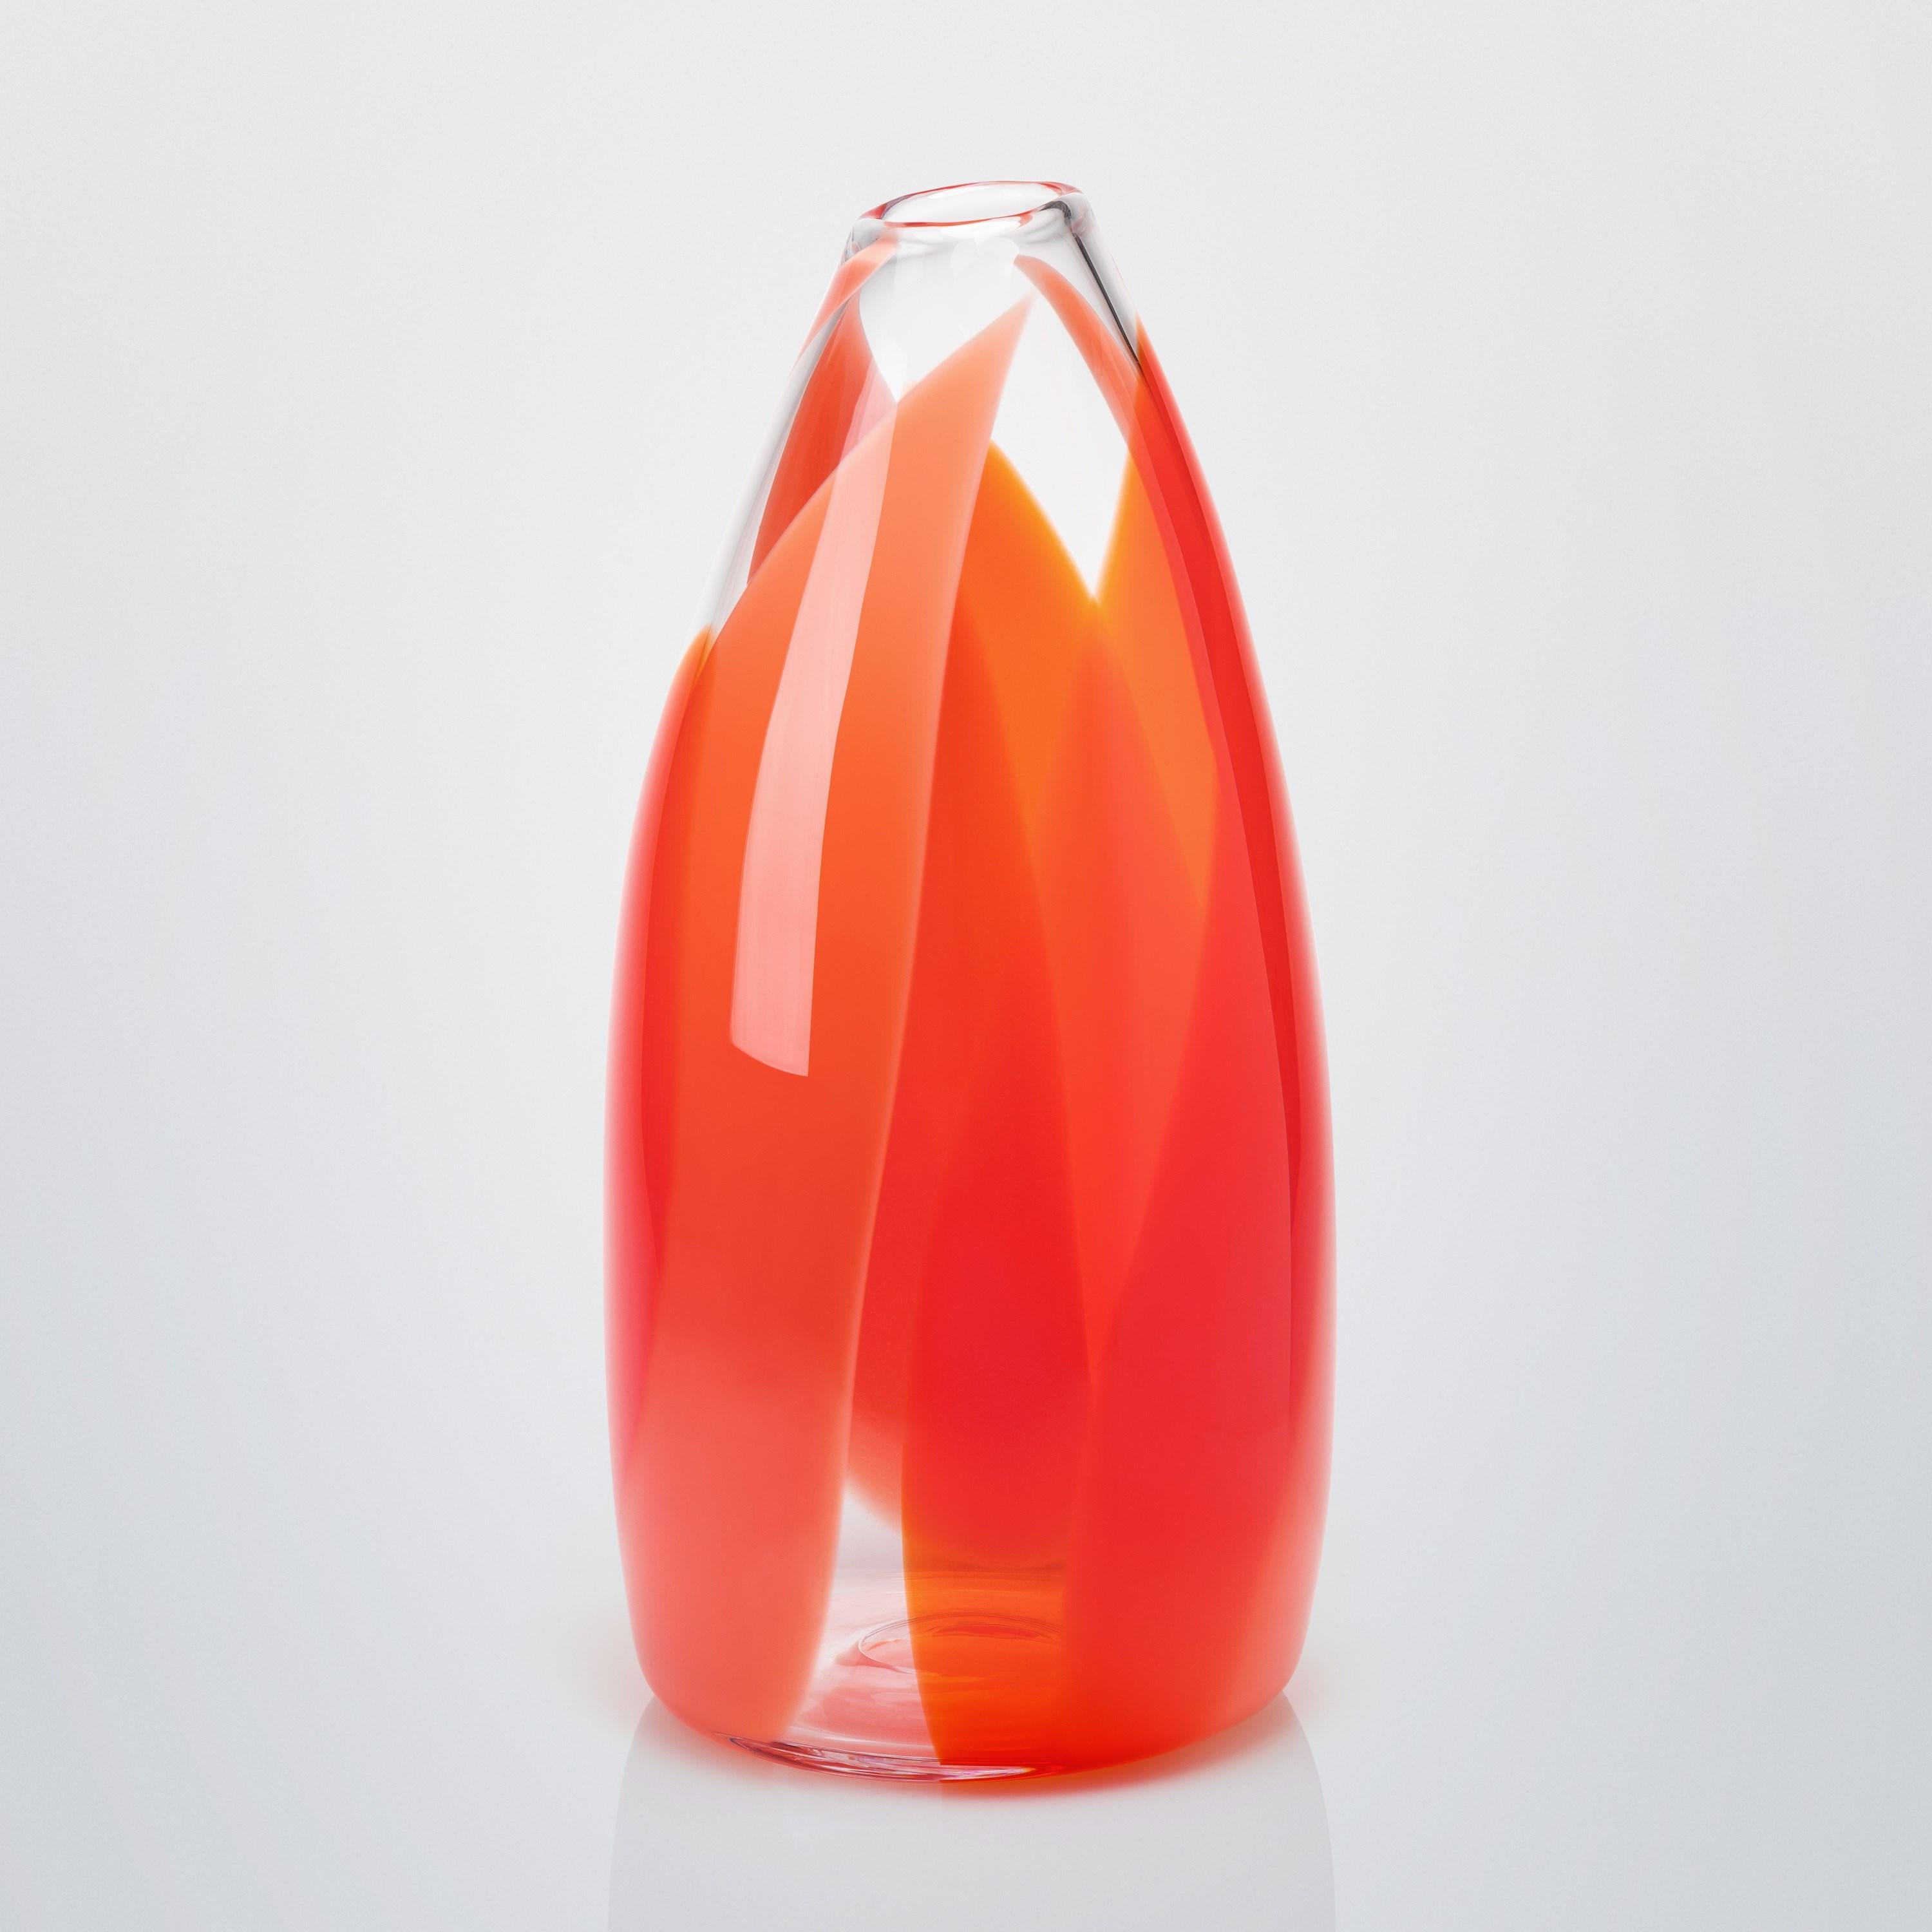 Organic Modern Waves No 491, abstract red, peach & orange handblown glass vase by Neil Wilkin For Sale